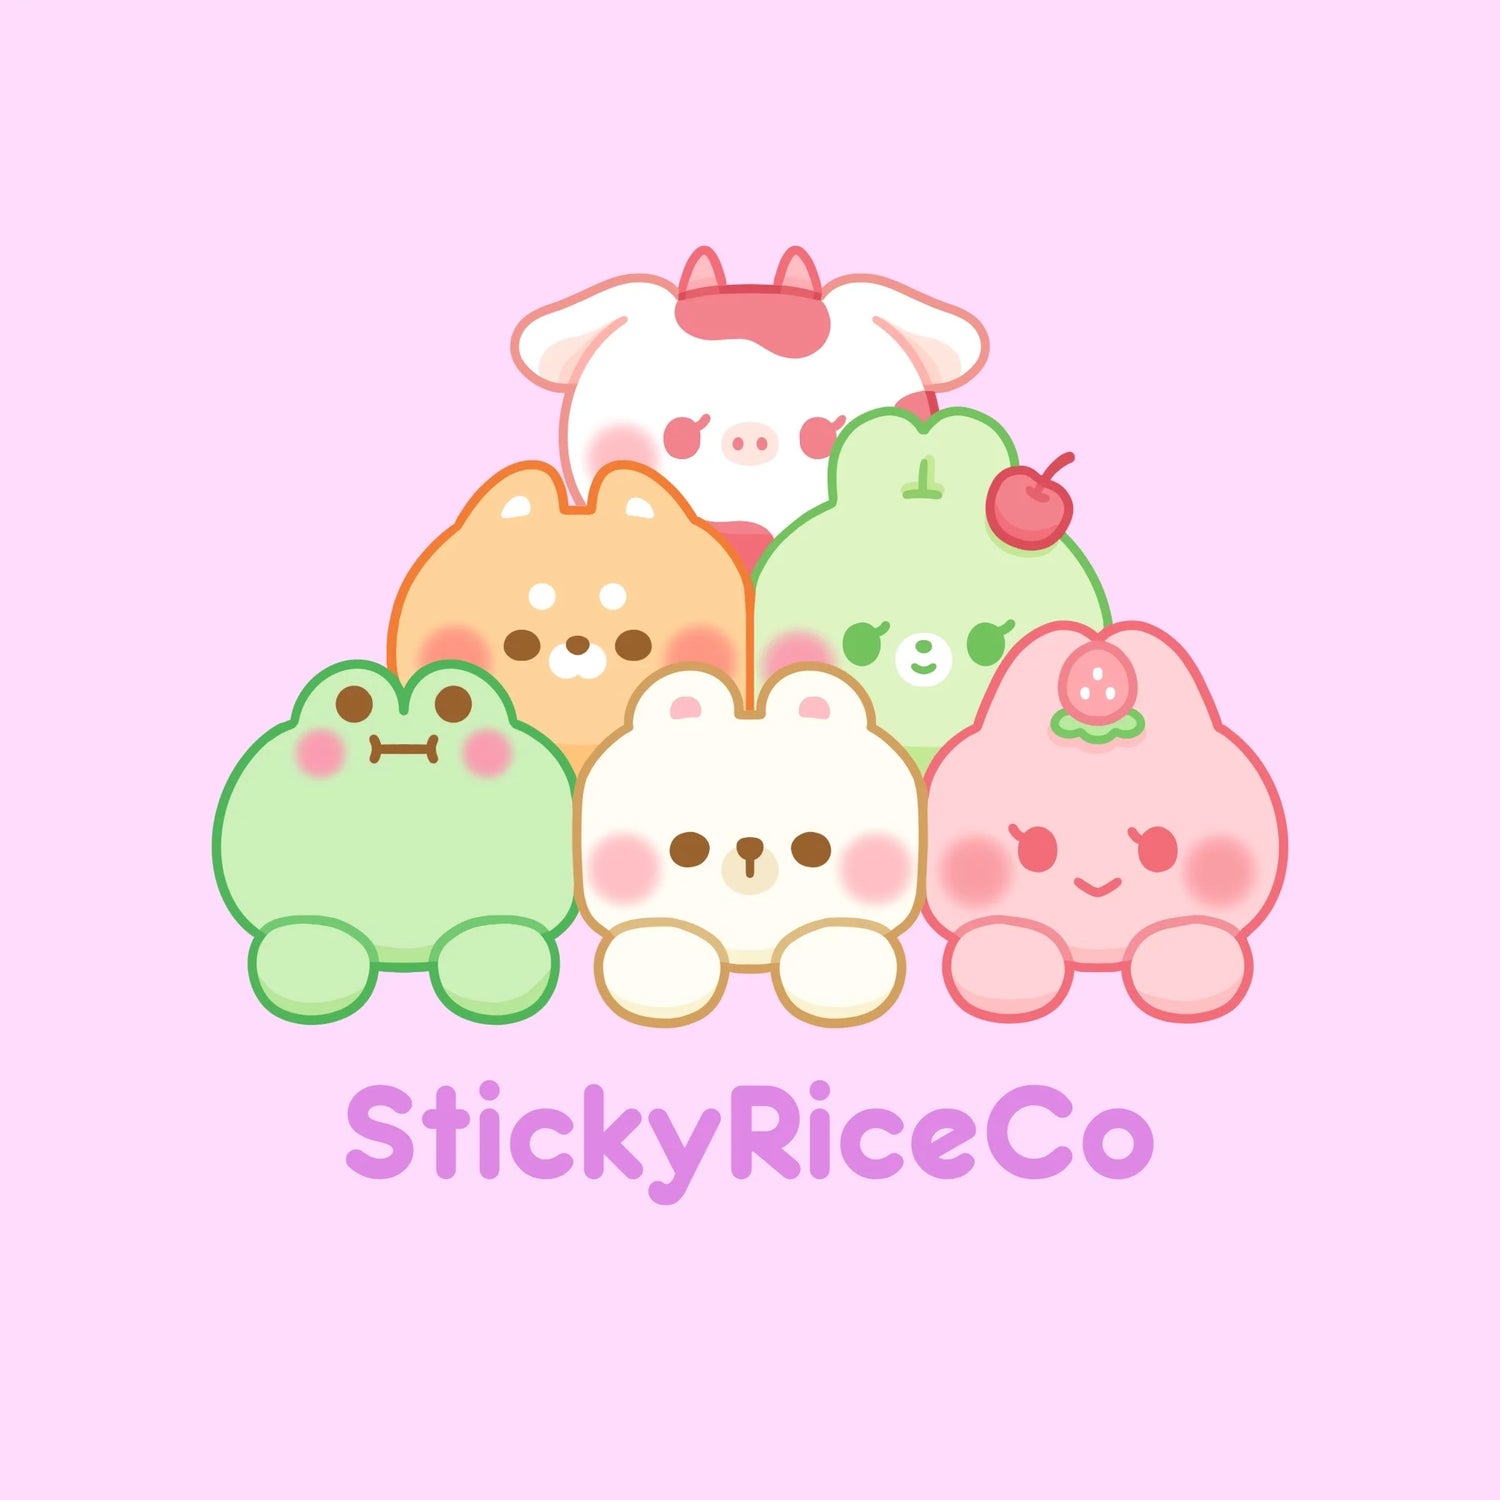 StickyRiceCo